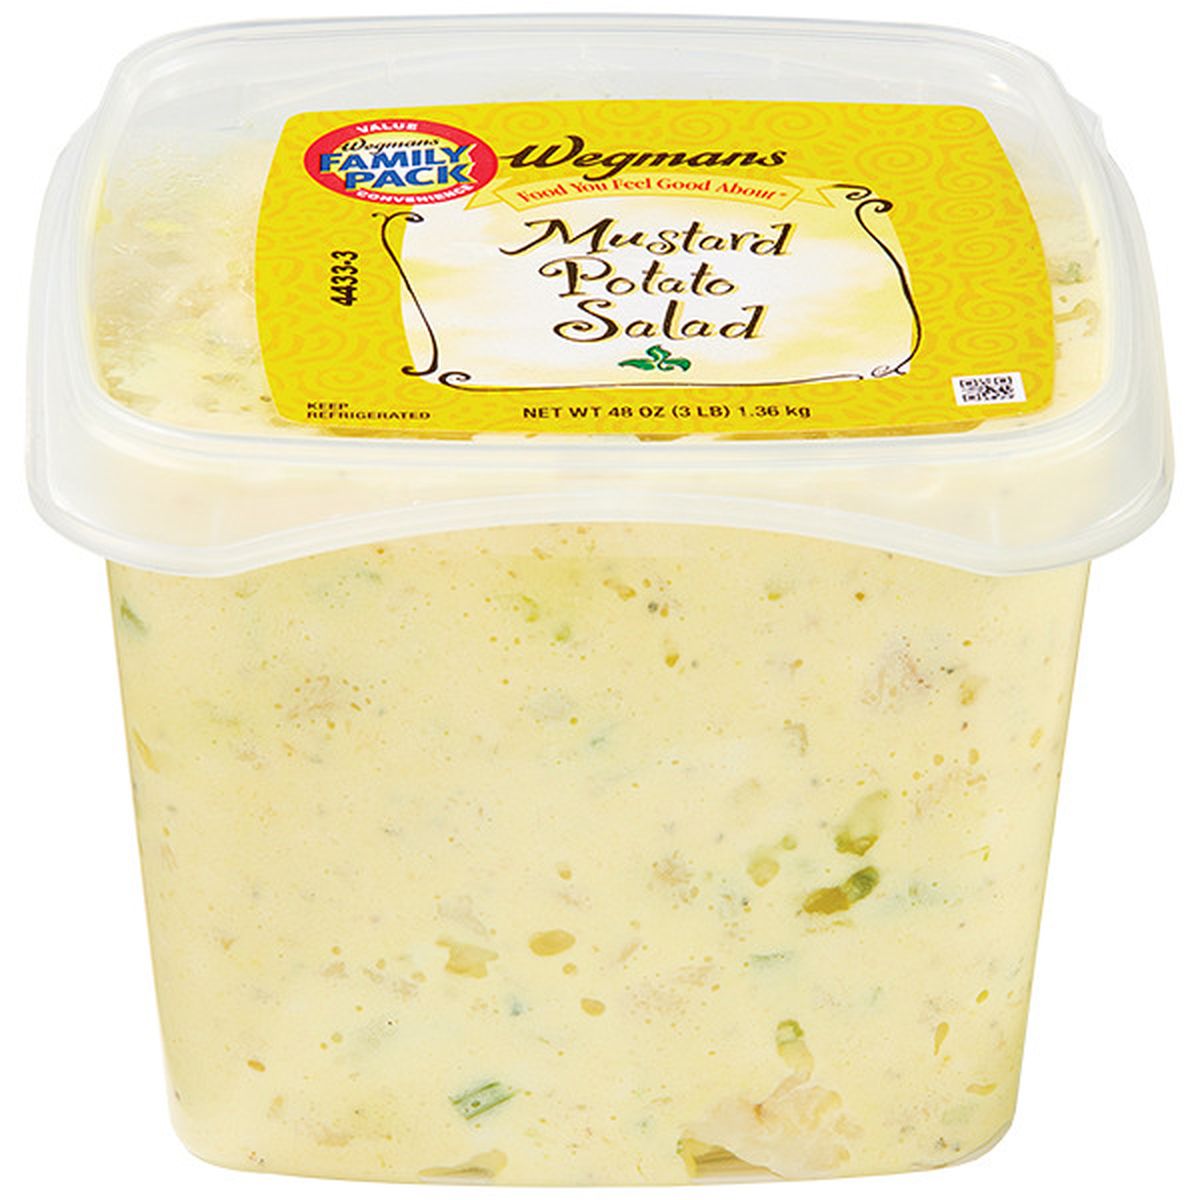 Calories in Wegmans Mustard Potato Salad, FAMILY PACK